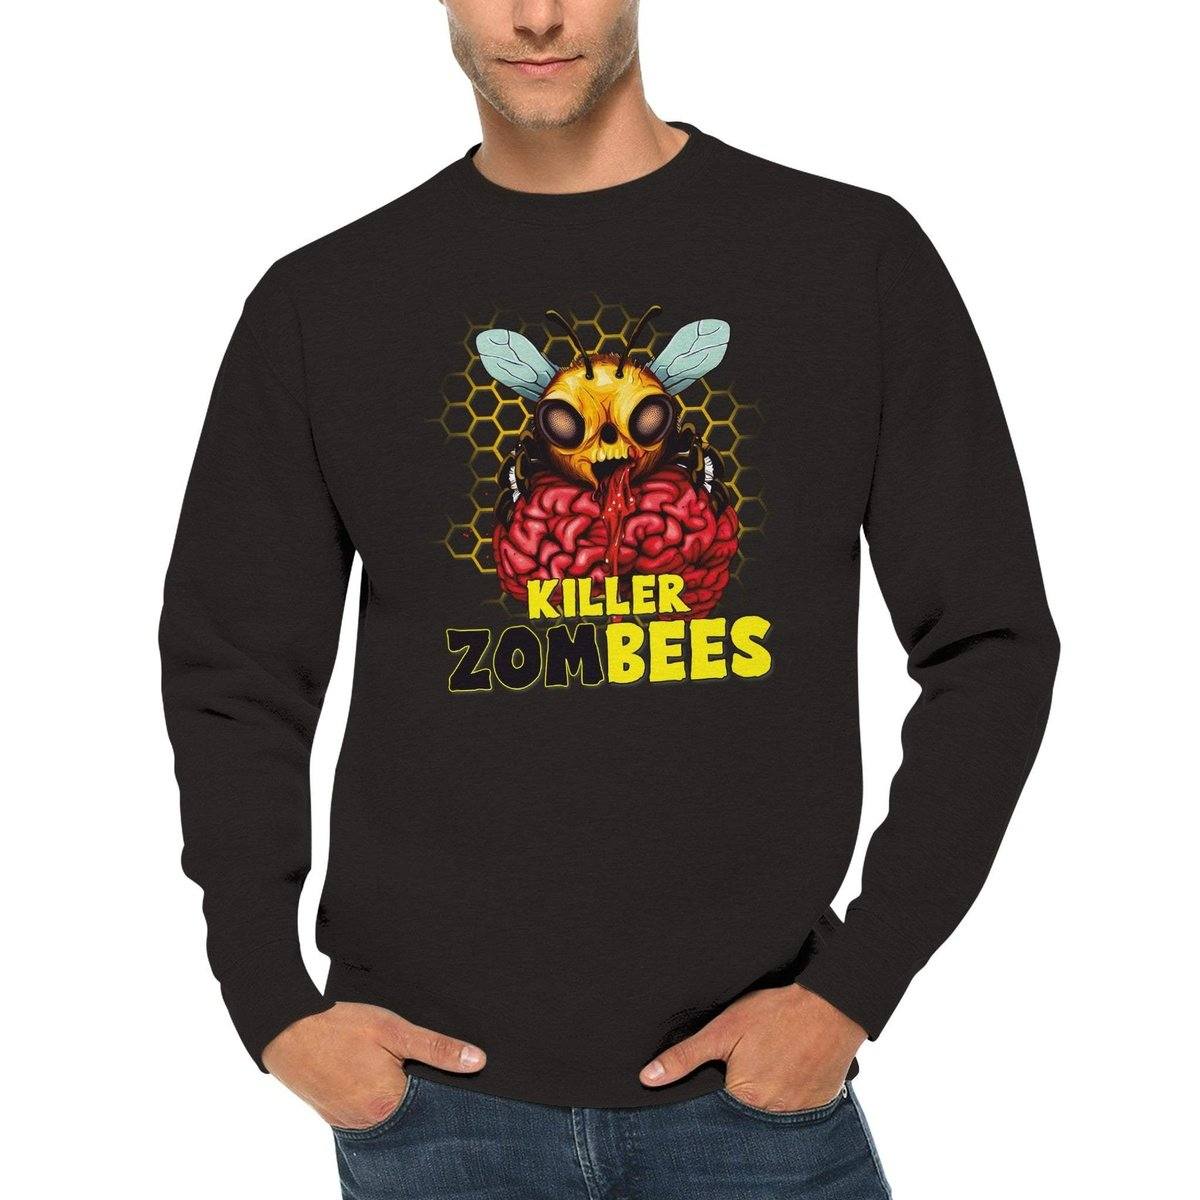 Killer Zombees - Premium Unisex Crewneck Sweatshirt Australia Online Color Black / S